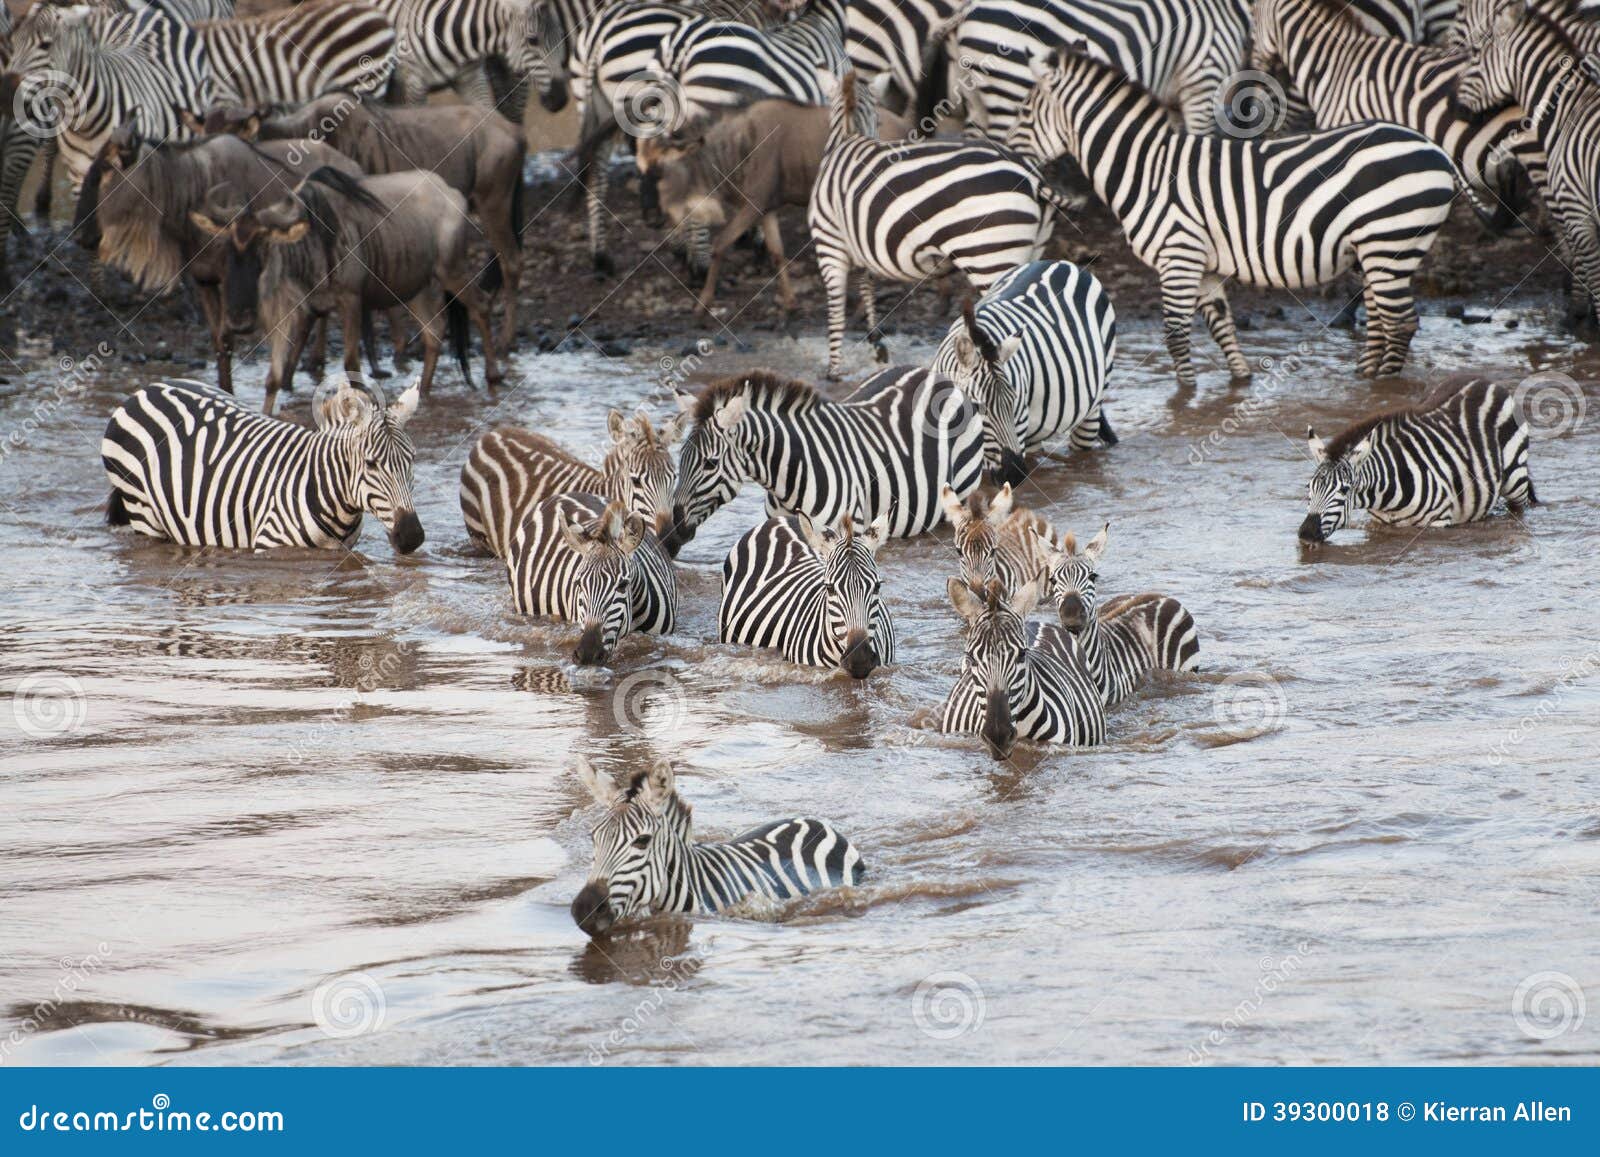 zebra crossing the mara river in kenya, africa